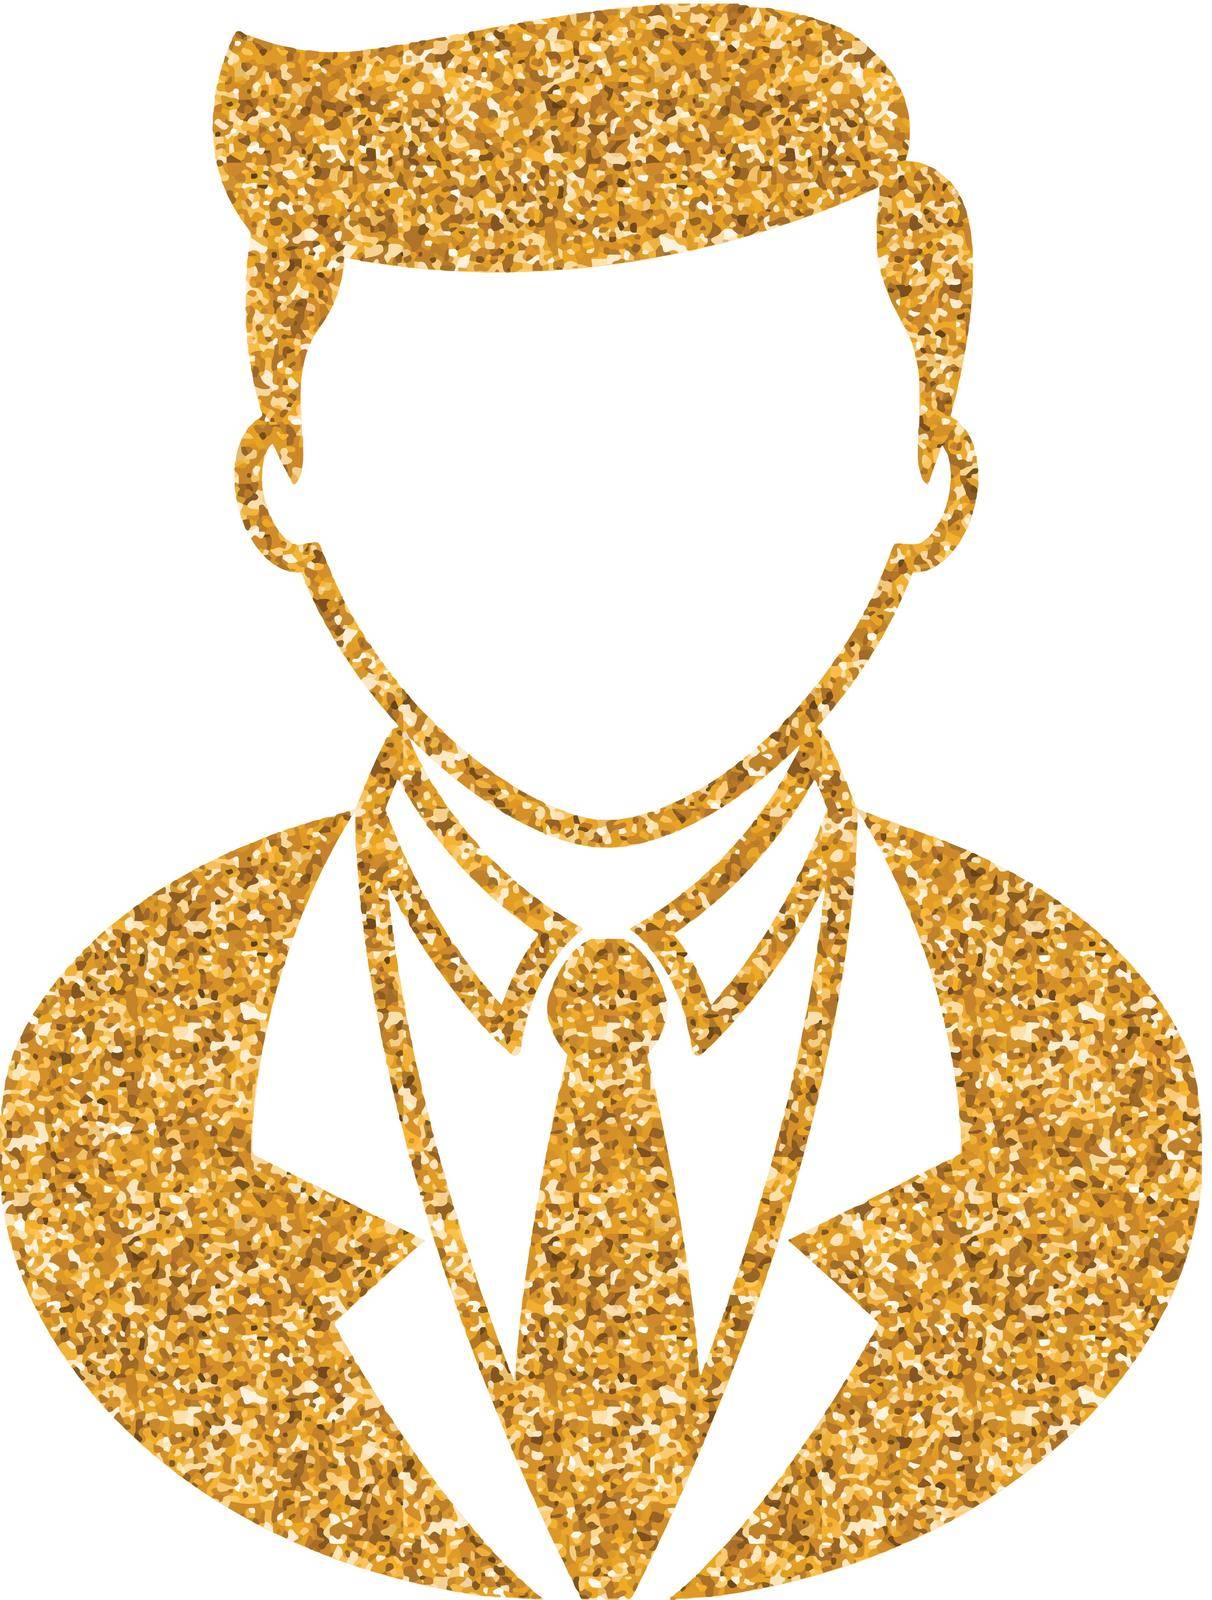 Gold Glitter Icon - Businessman by puruan